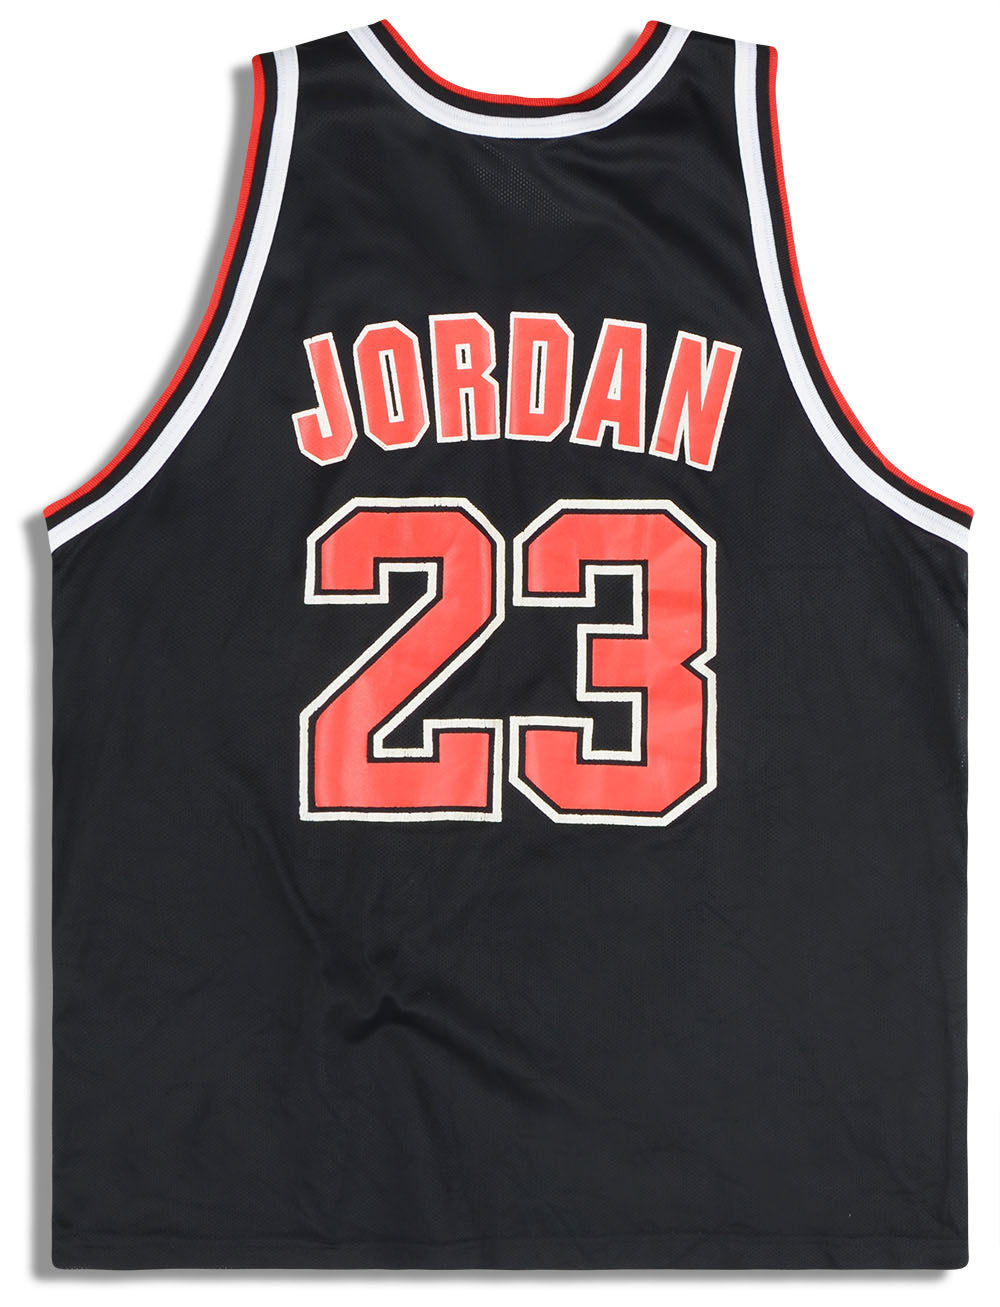 Michael Jordan Chicago Bulls Champion jersey – Thriller